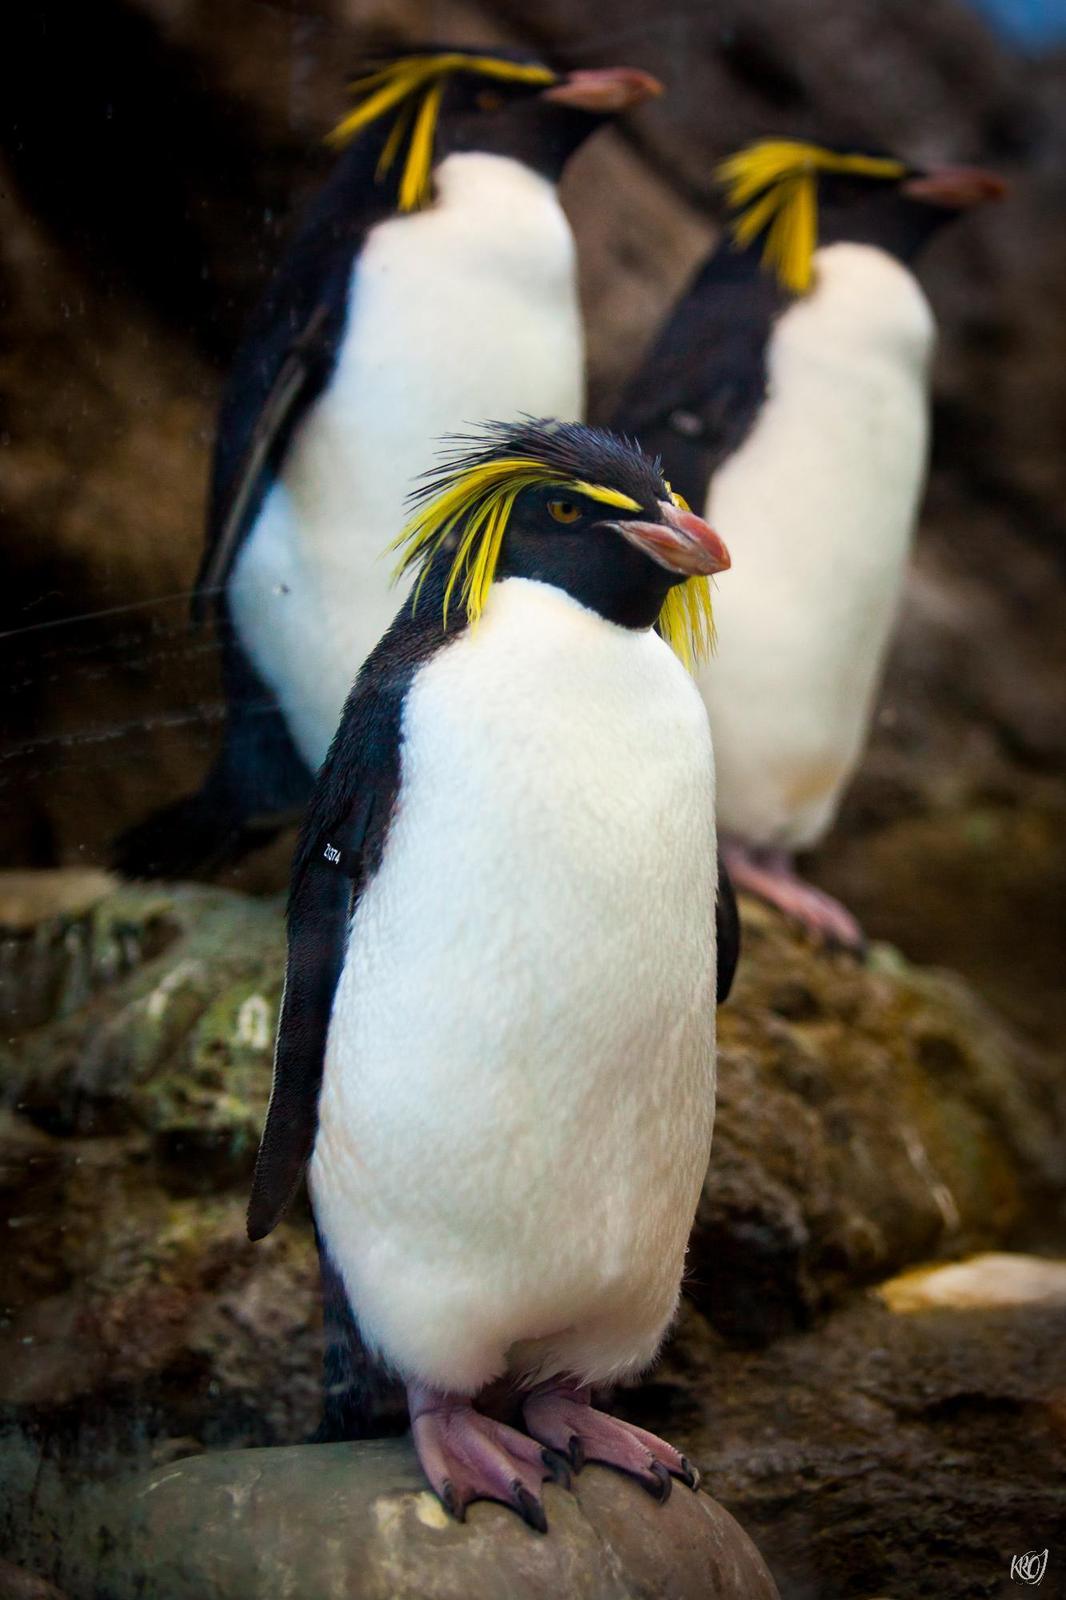 Moseley's Rockhopper Penguin Photo by Kristen Ortwerth-Jewell